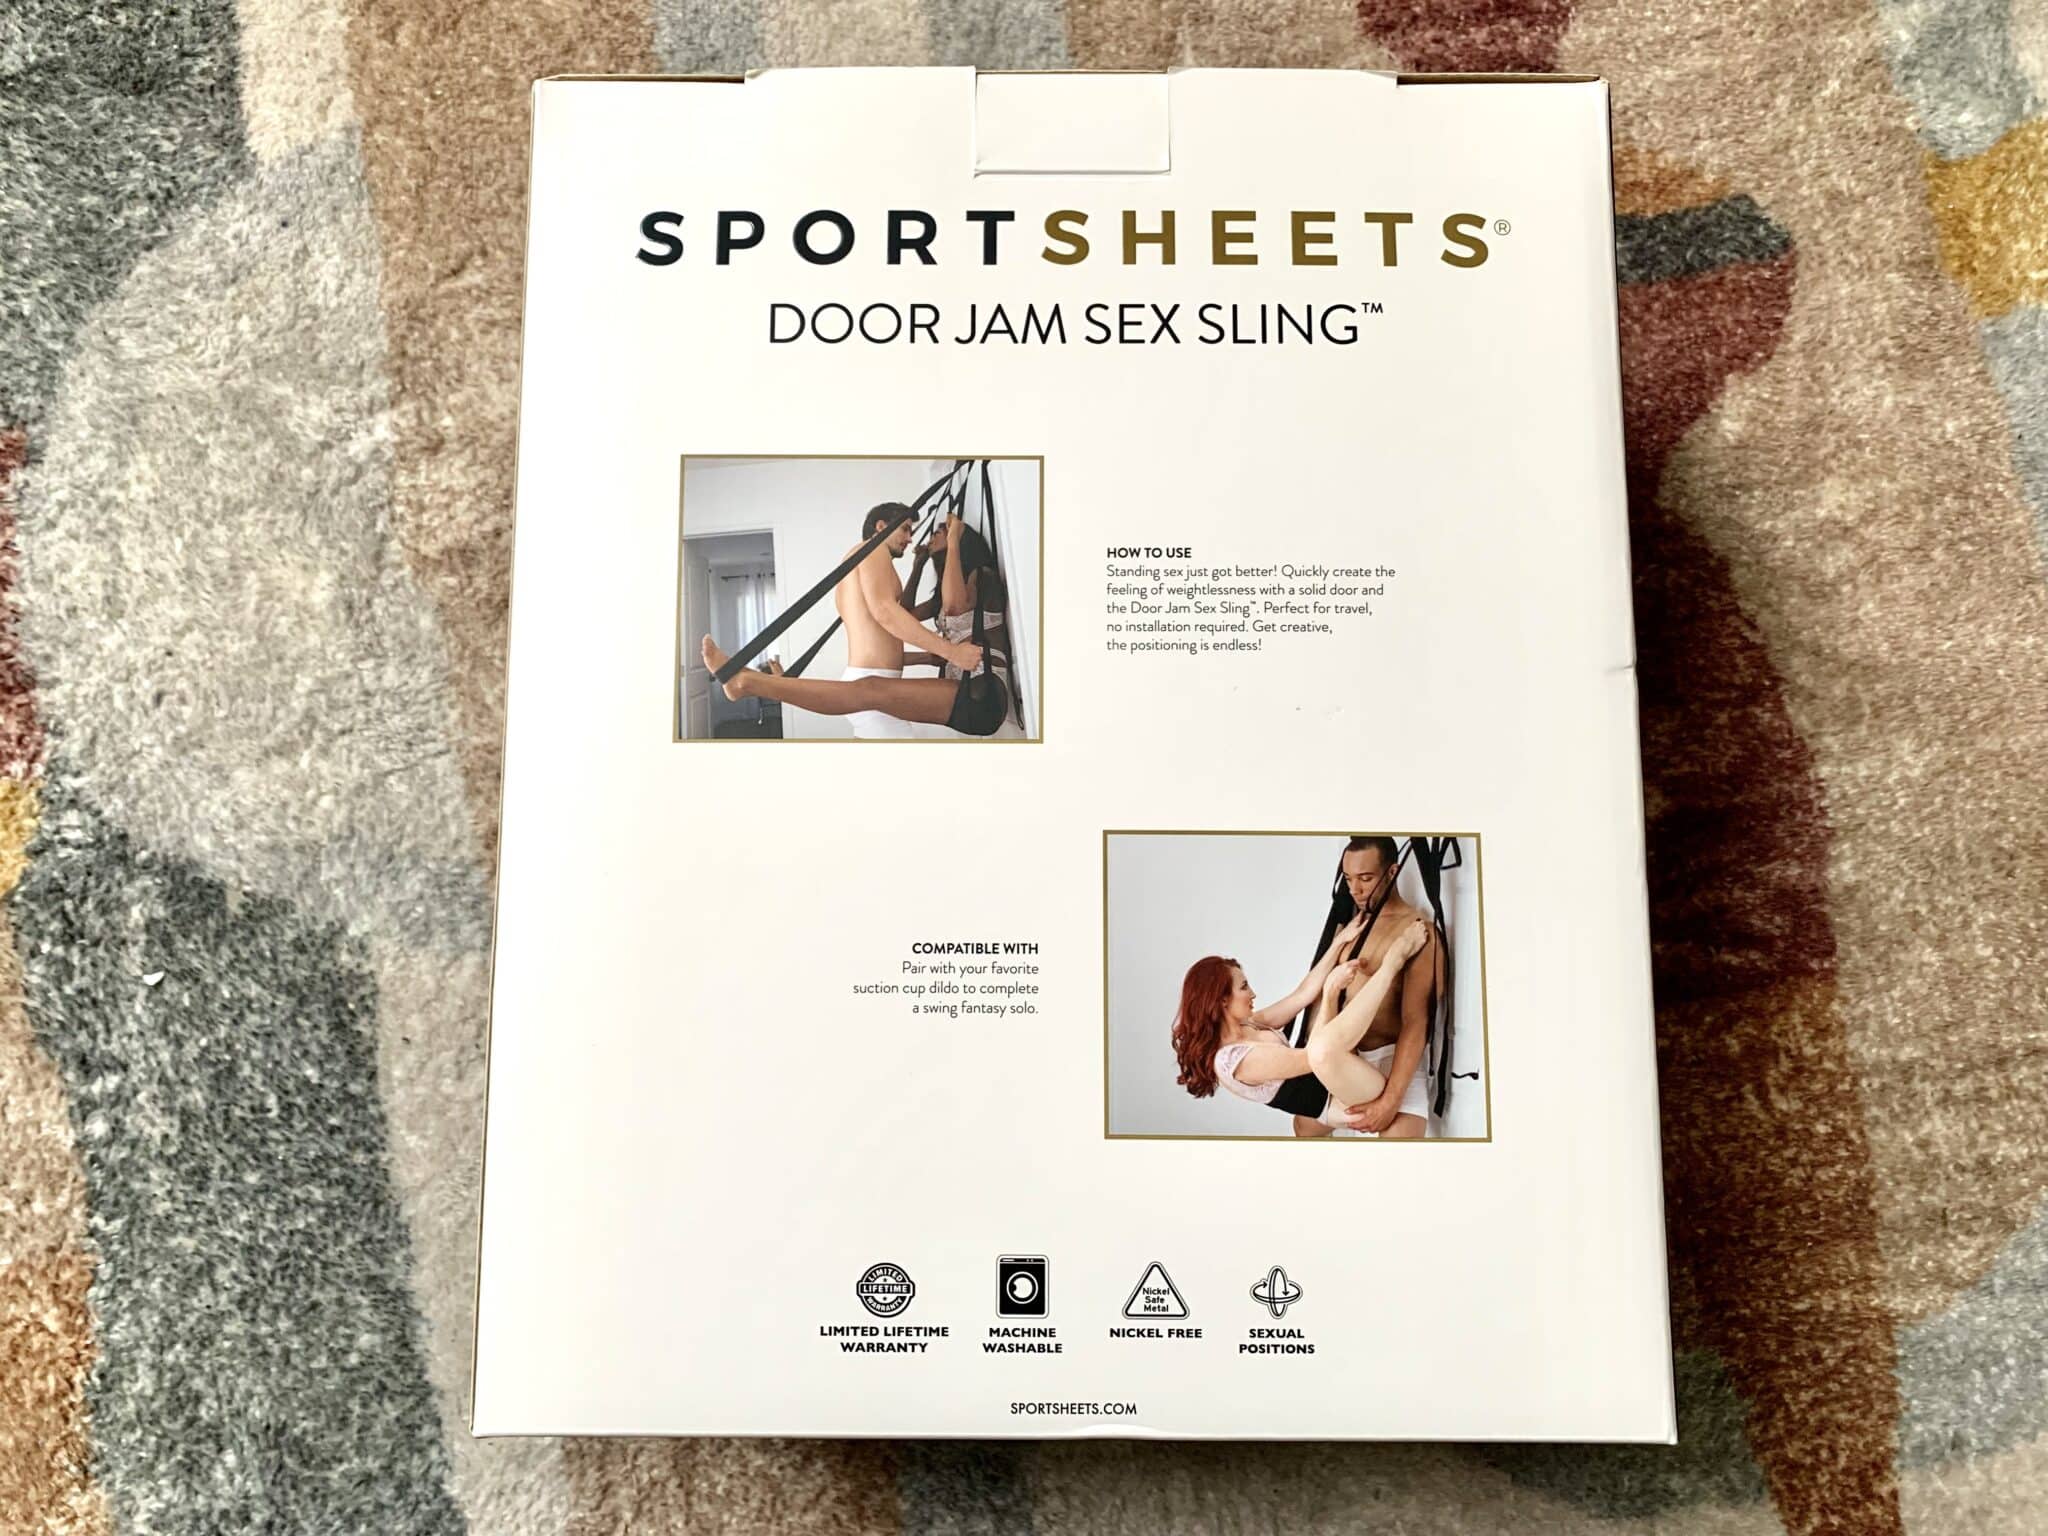 Sportsheets Door Jam Sex Sling Packaging: Adding Value or Just Fluff?